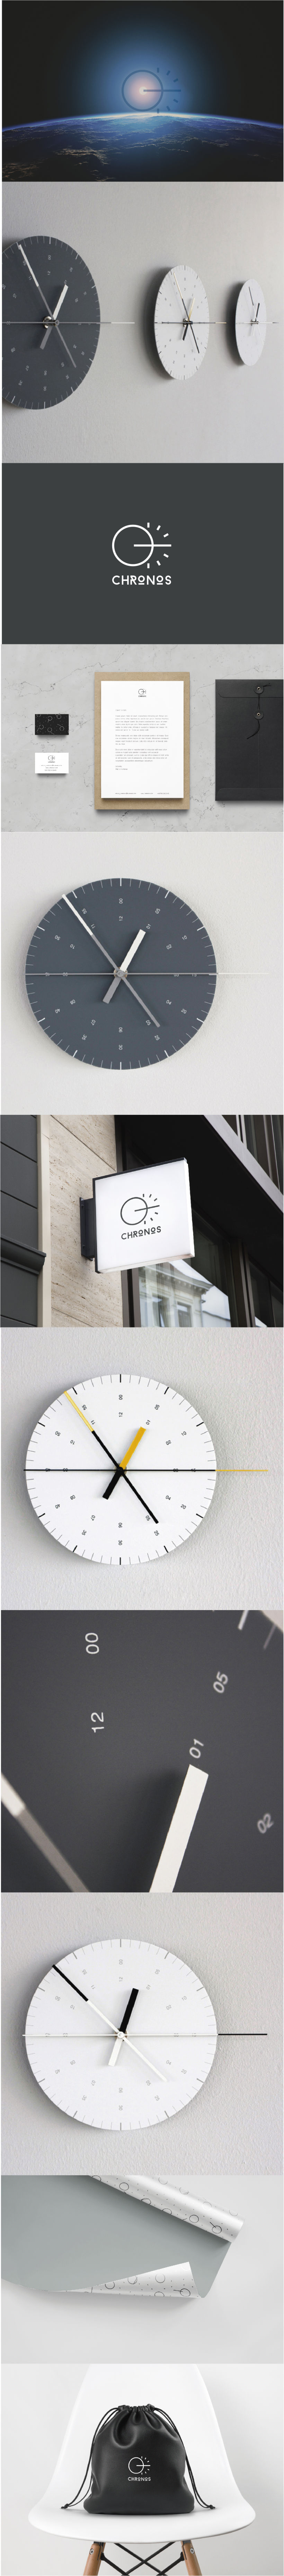 Identidad corporativa relojes CHRONOS -1